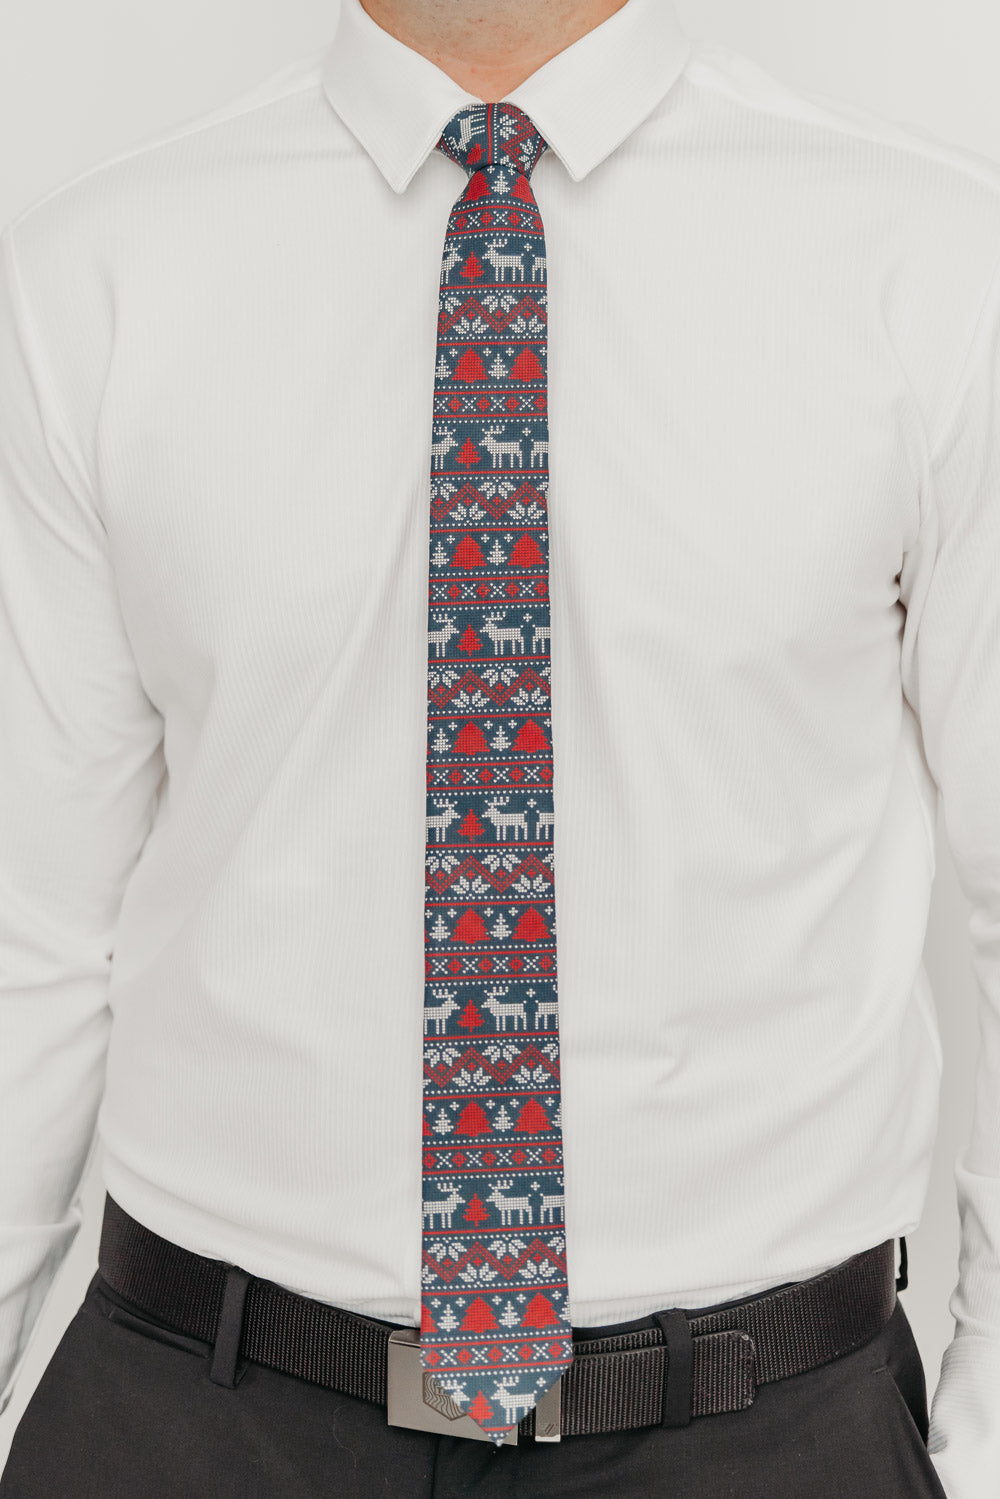 DAZI Winter Wonderland tie worn with a white shirt, black belt and black suit pants.